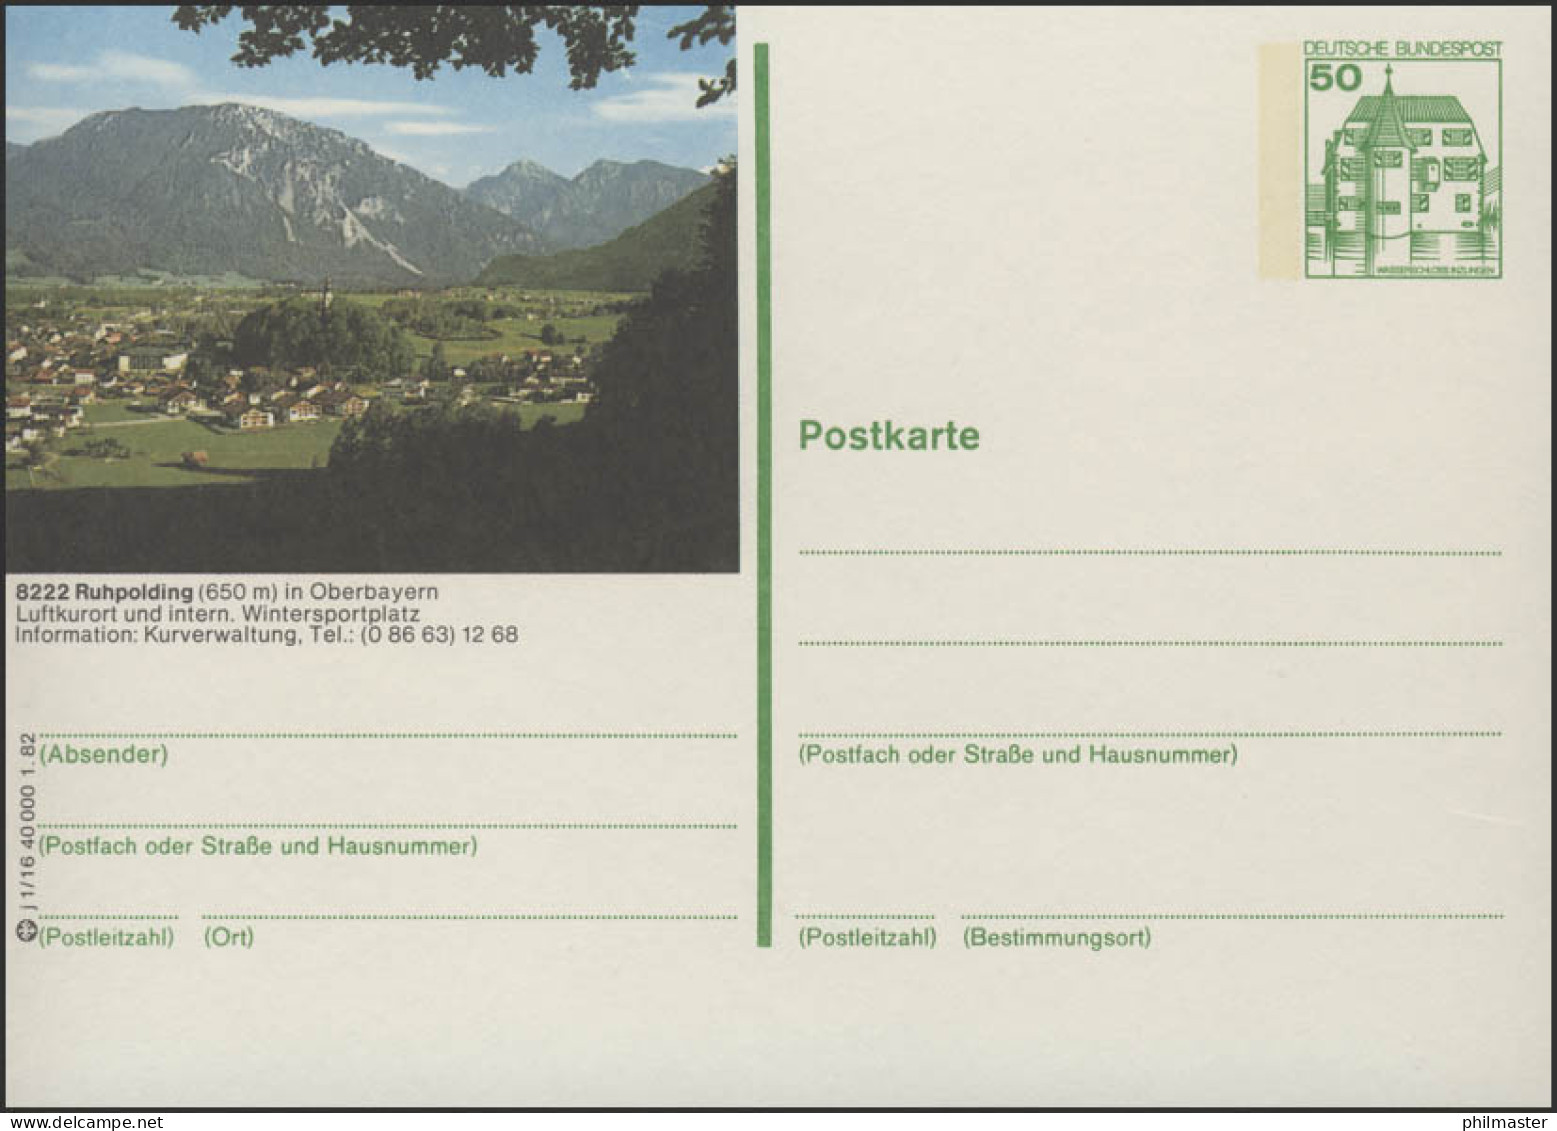 P134-j1/016 - 8222 Ruhpolding, Panorama ** - Illustrated Postcards - Mint